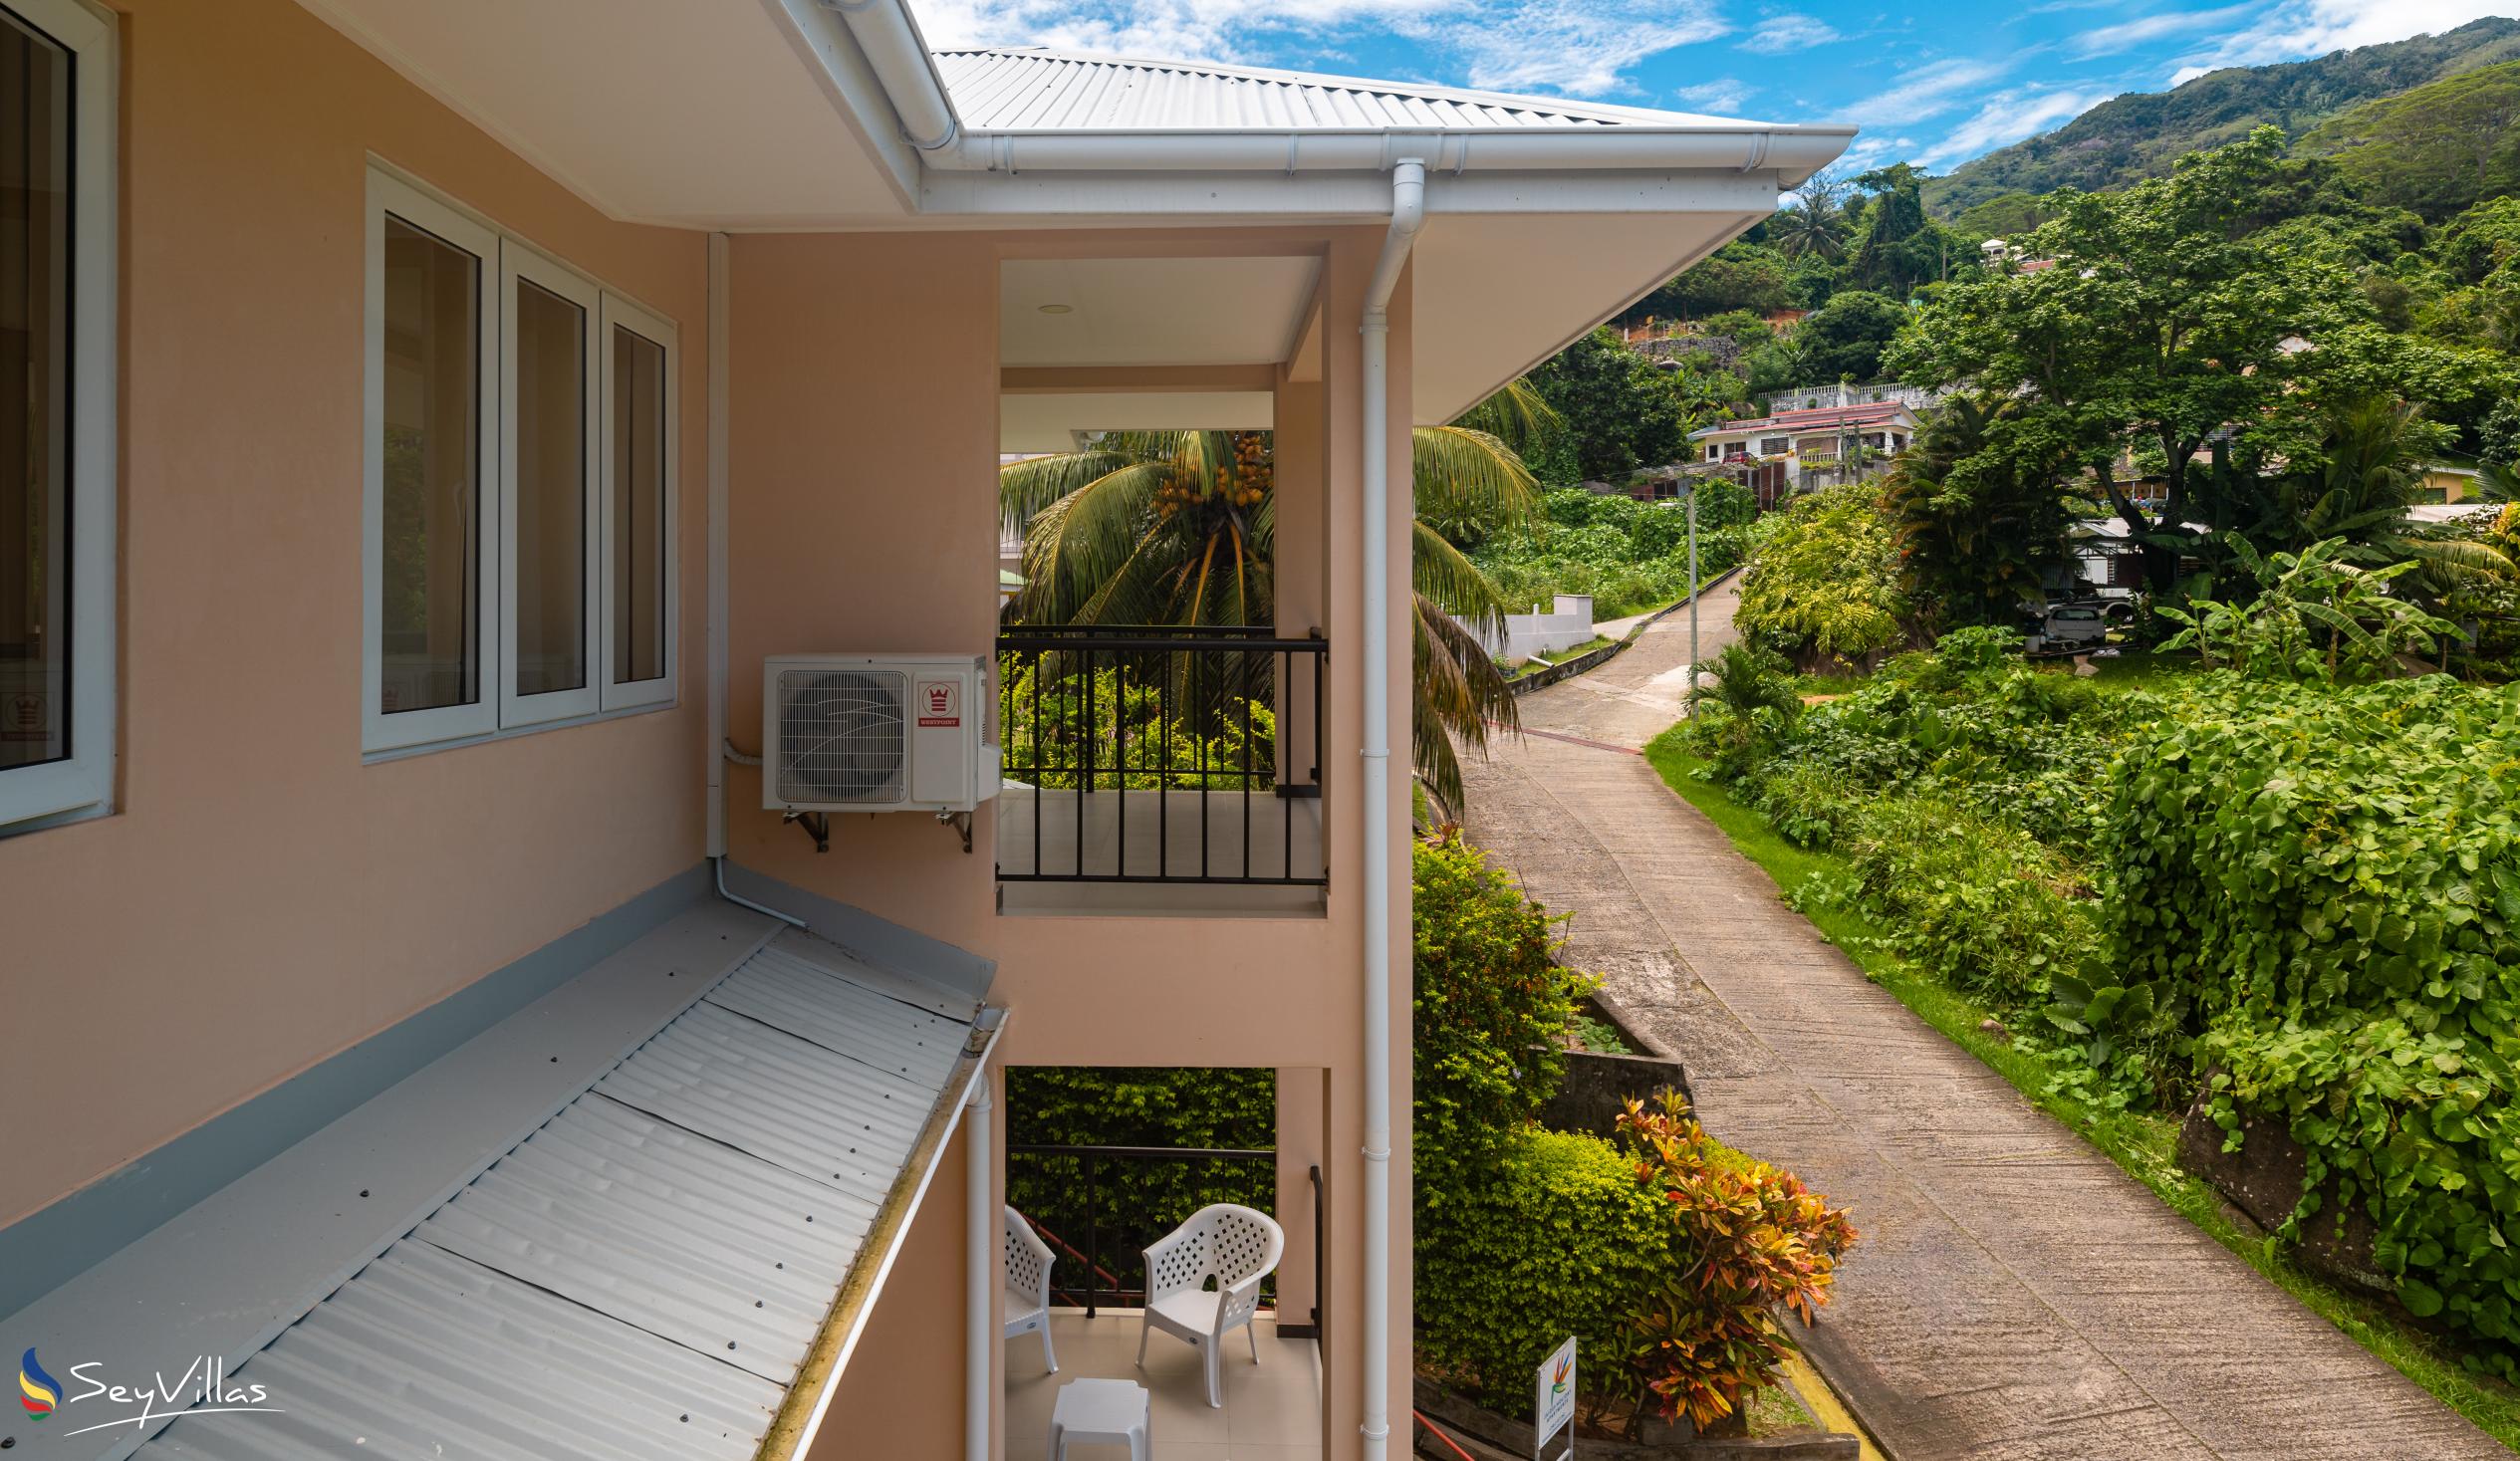 Photo 12: JAIDSS Holiday Apartments - Outdoor area - Mahé (Seychelles)